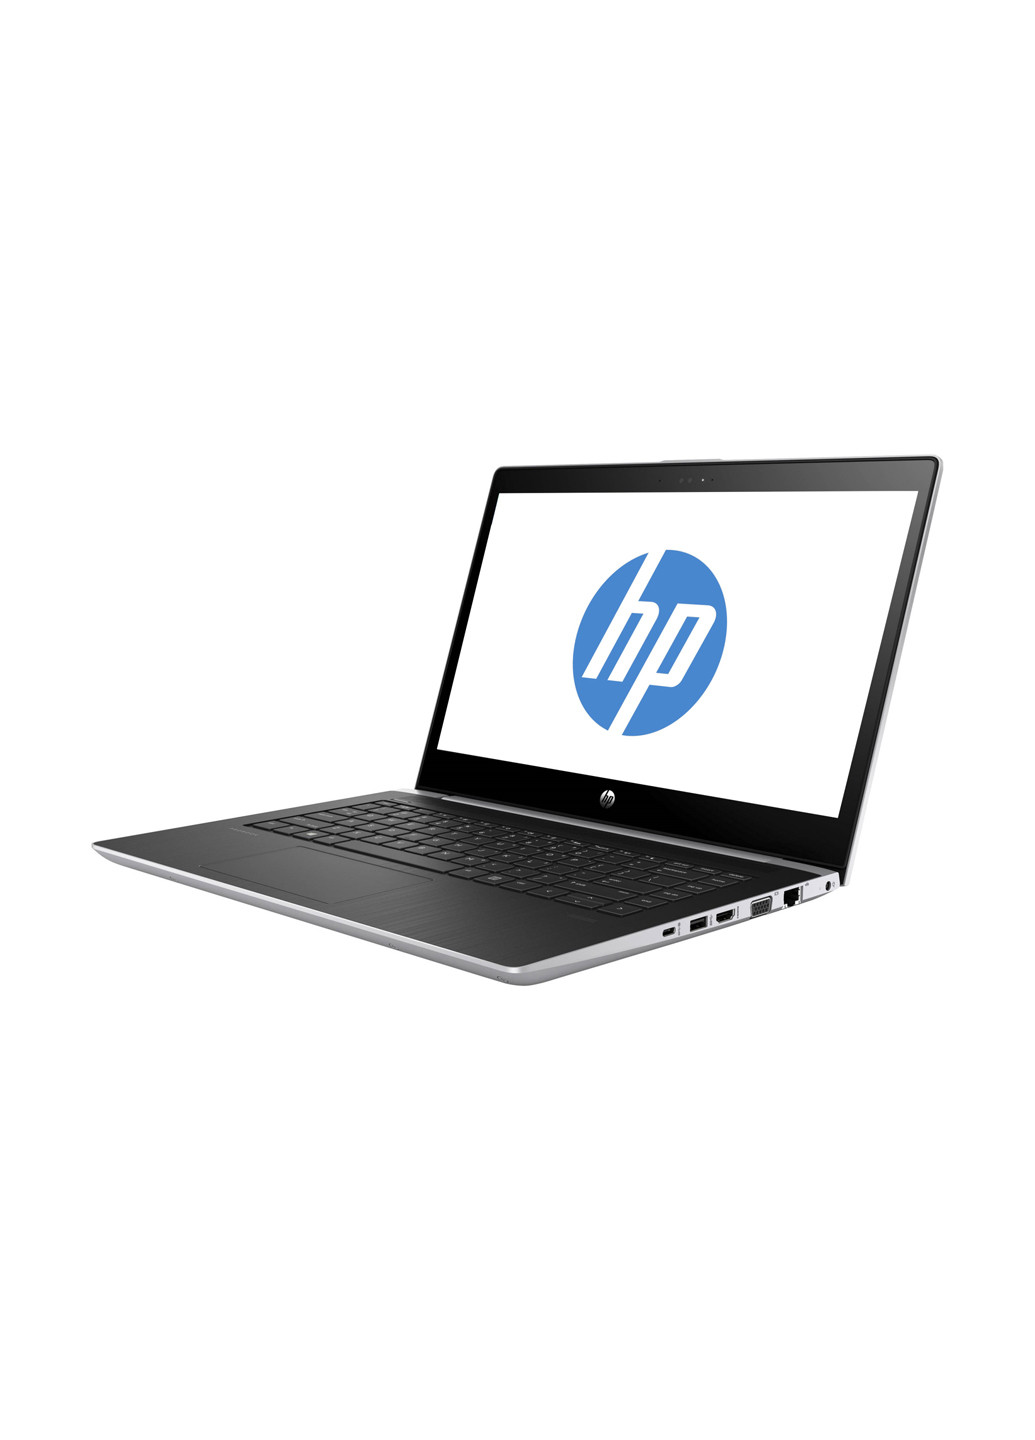 Ноутбук Silver HP probook 440 g5 (4cj02av_v23) (130617545)